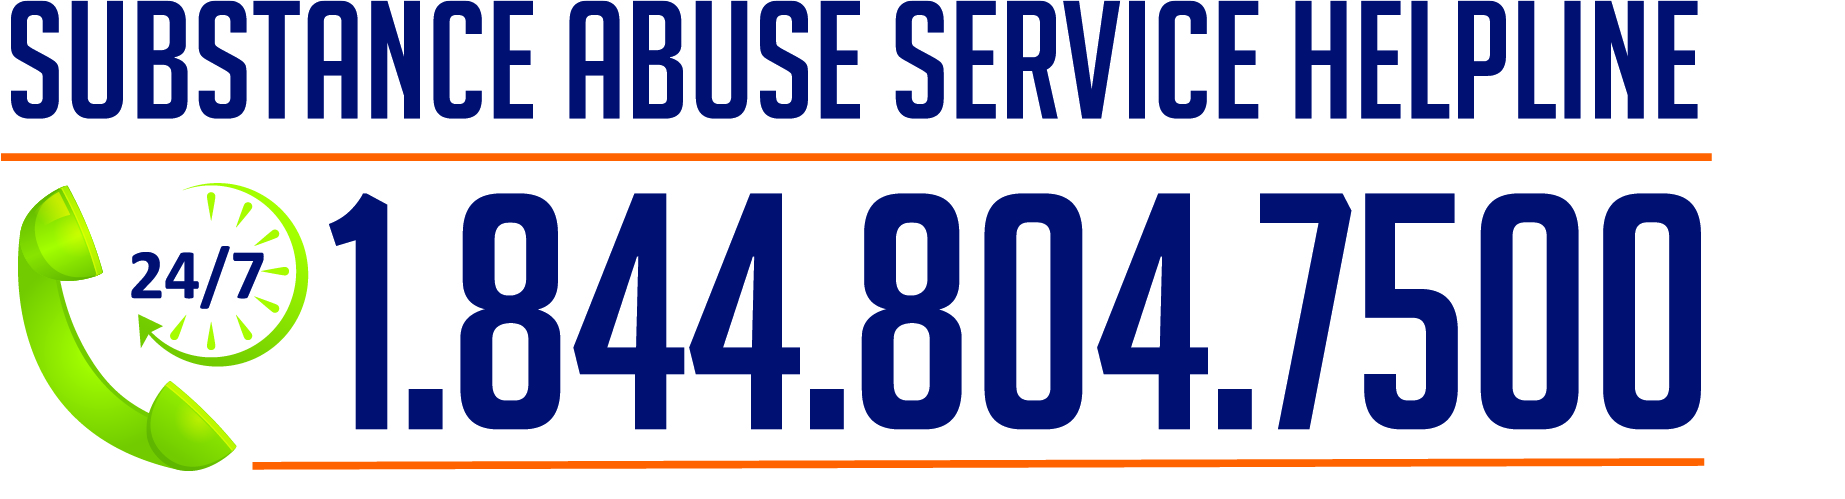 Substance Abuse Service Helpline Logo